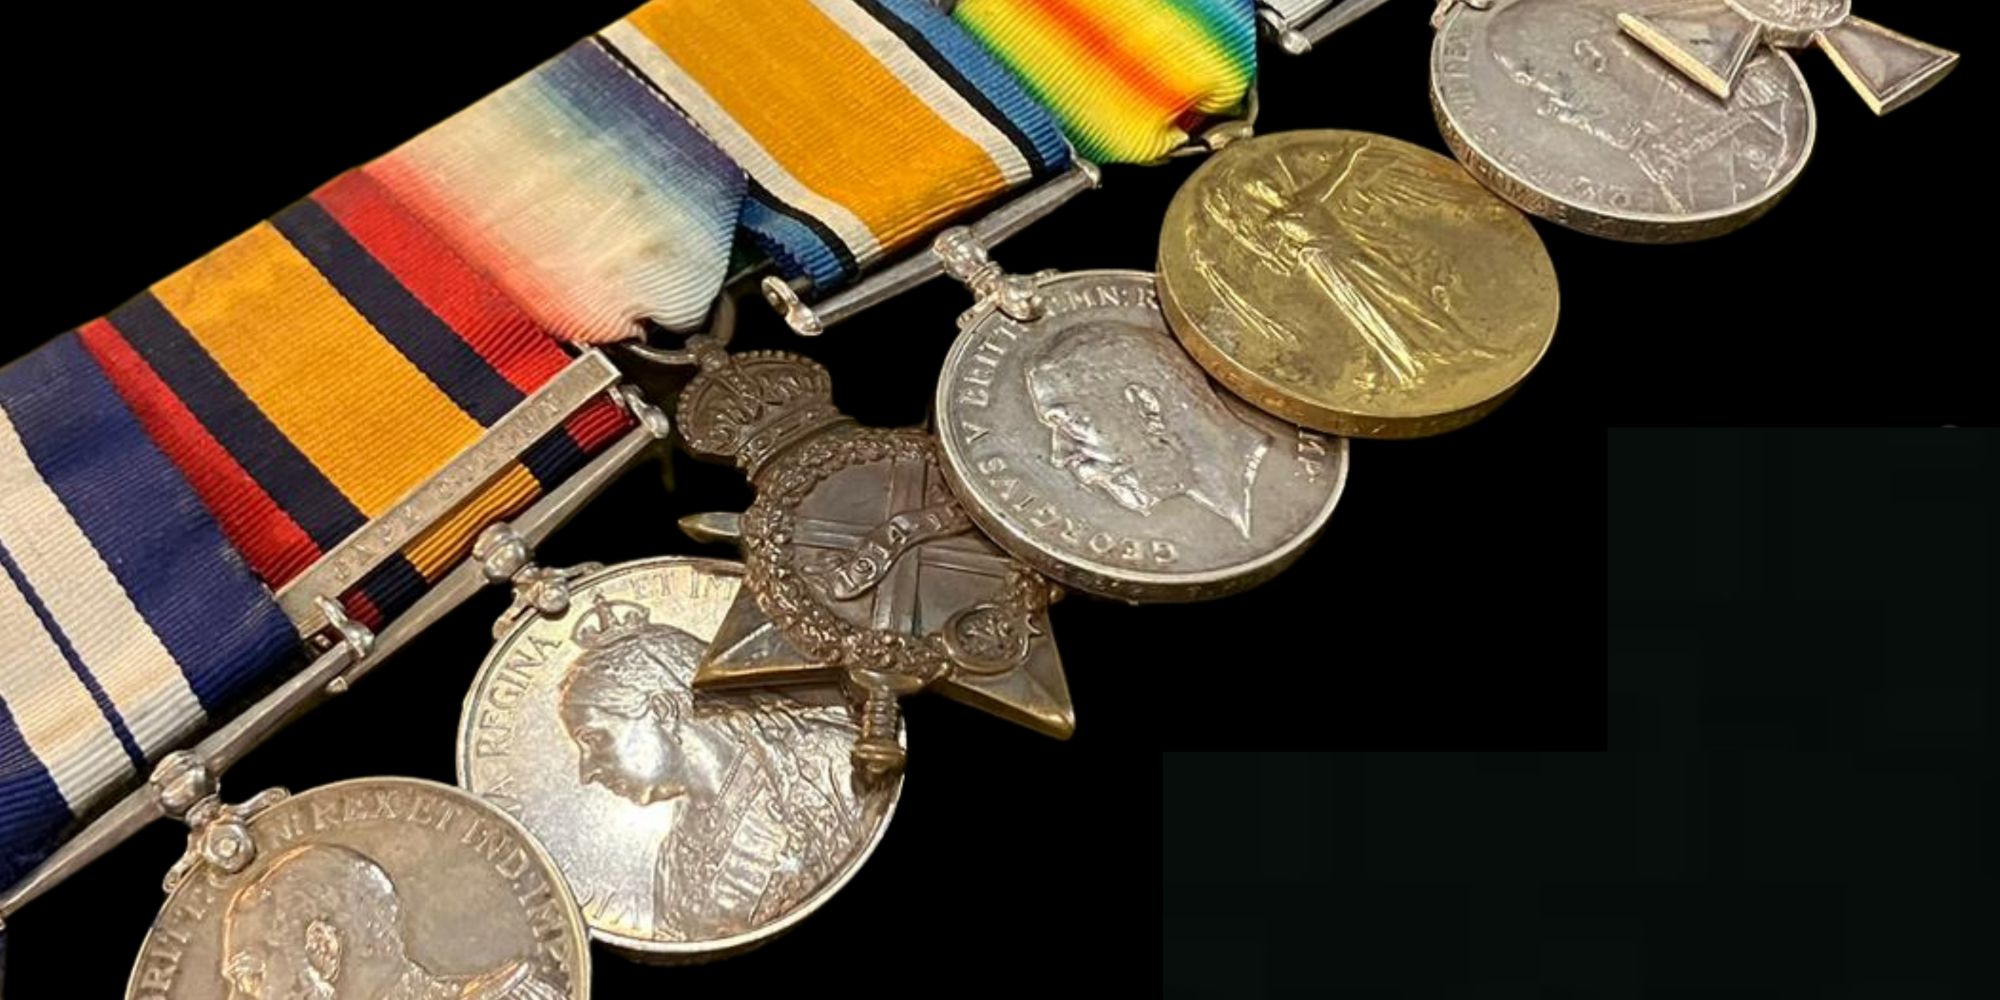 Medals, Awards, Banknotes & Coins